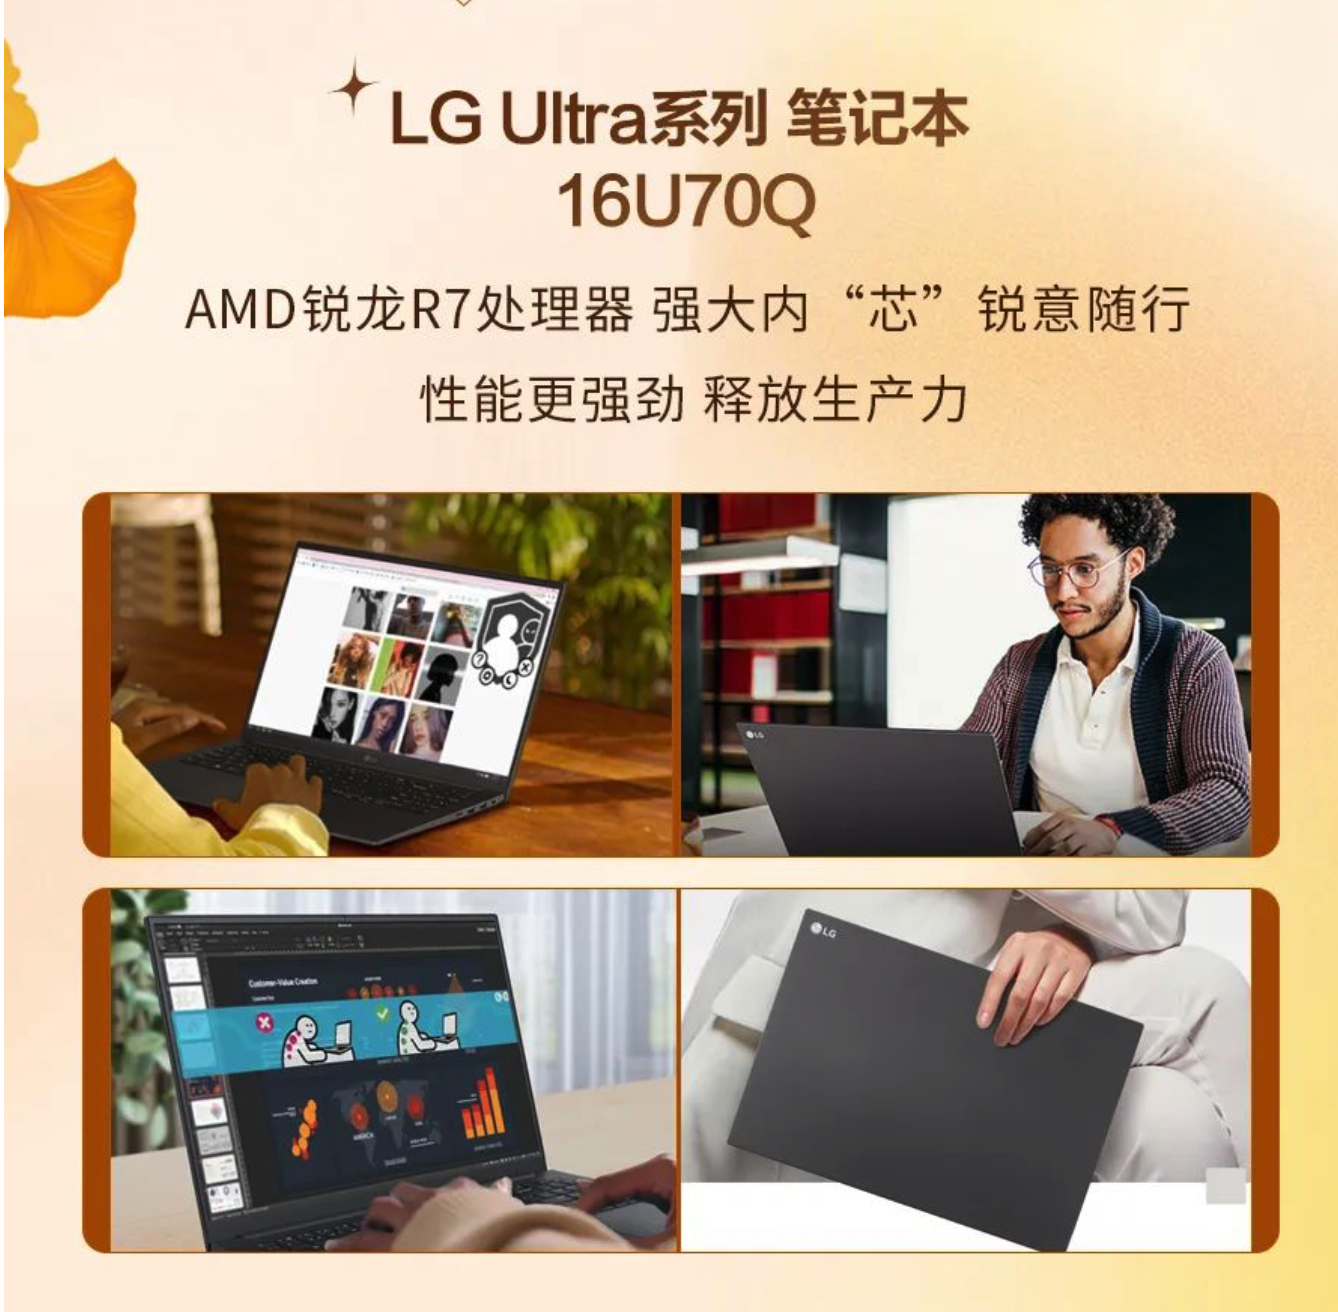 LG Ultra係列產品筆記本電腦行貨將要掛牌上市	，配備AMD R7CPU